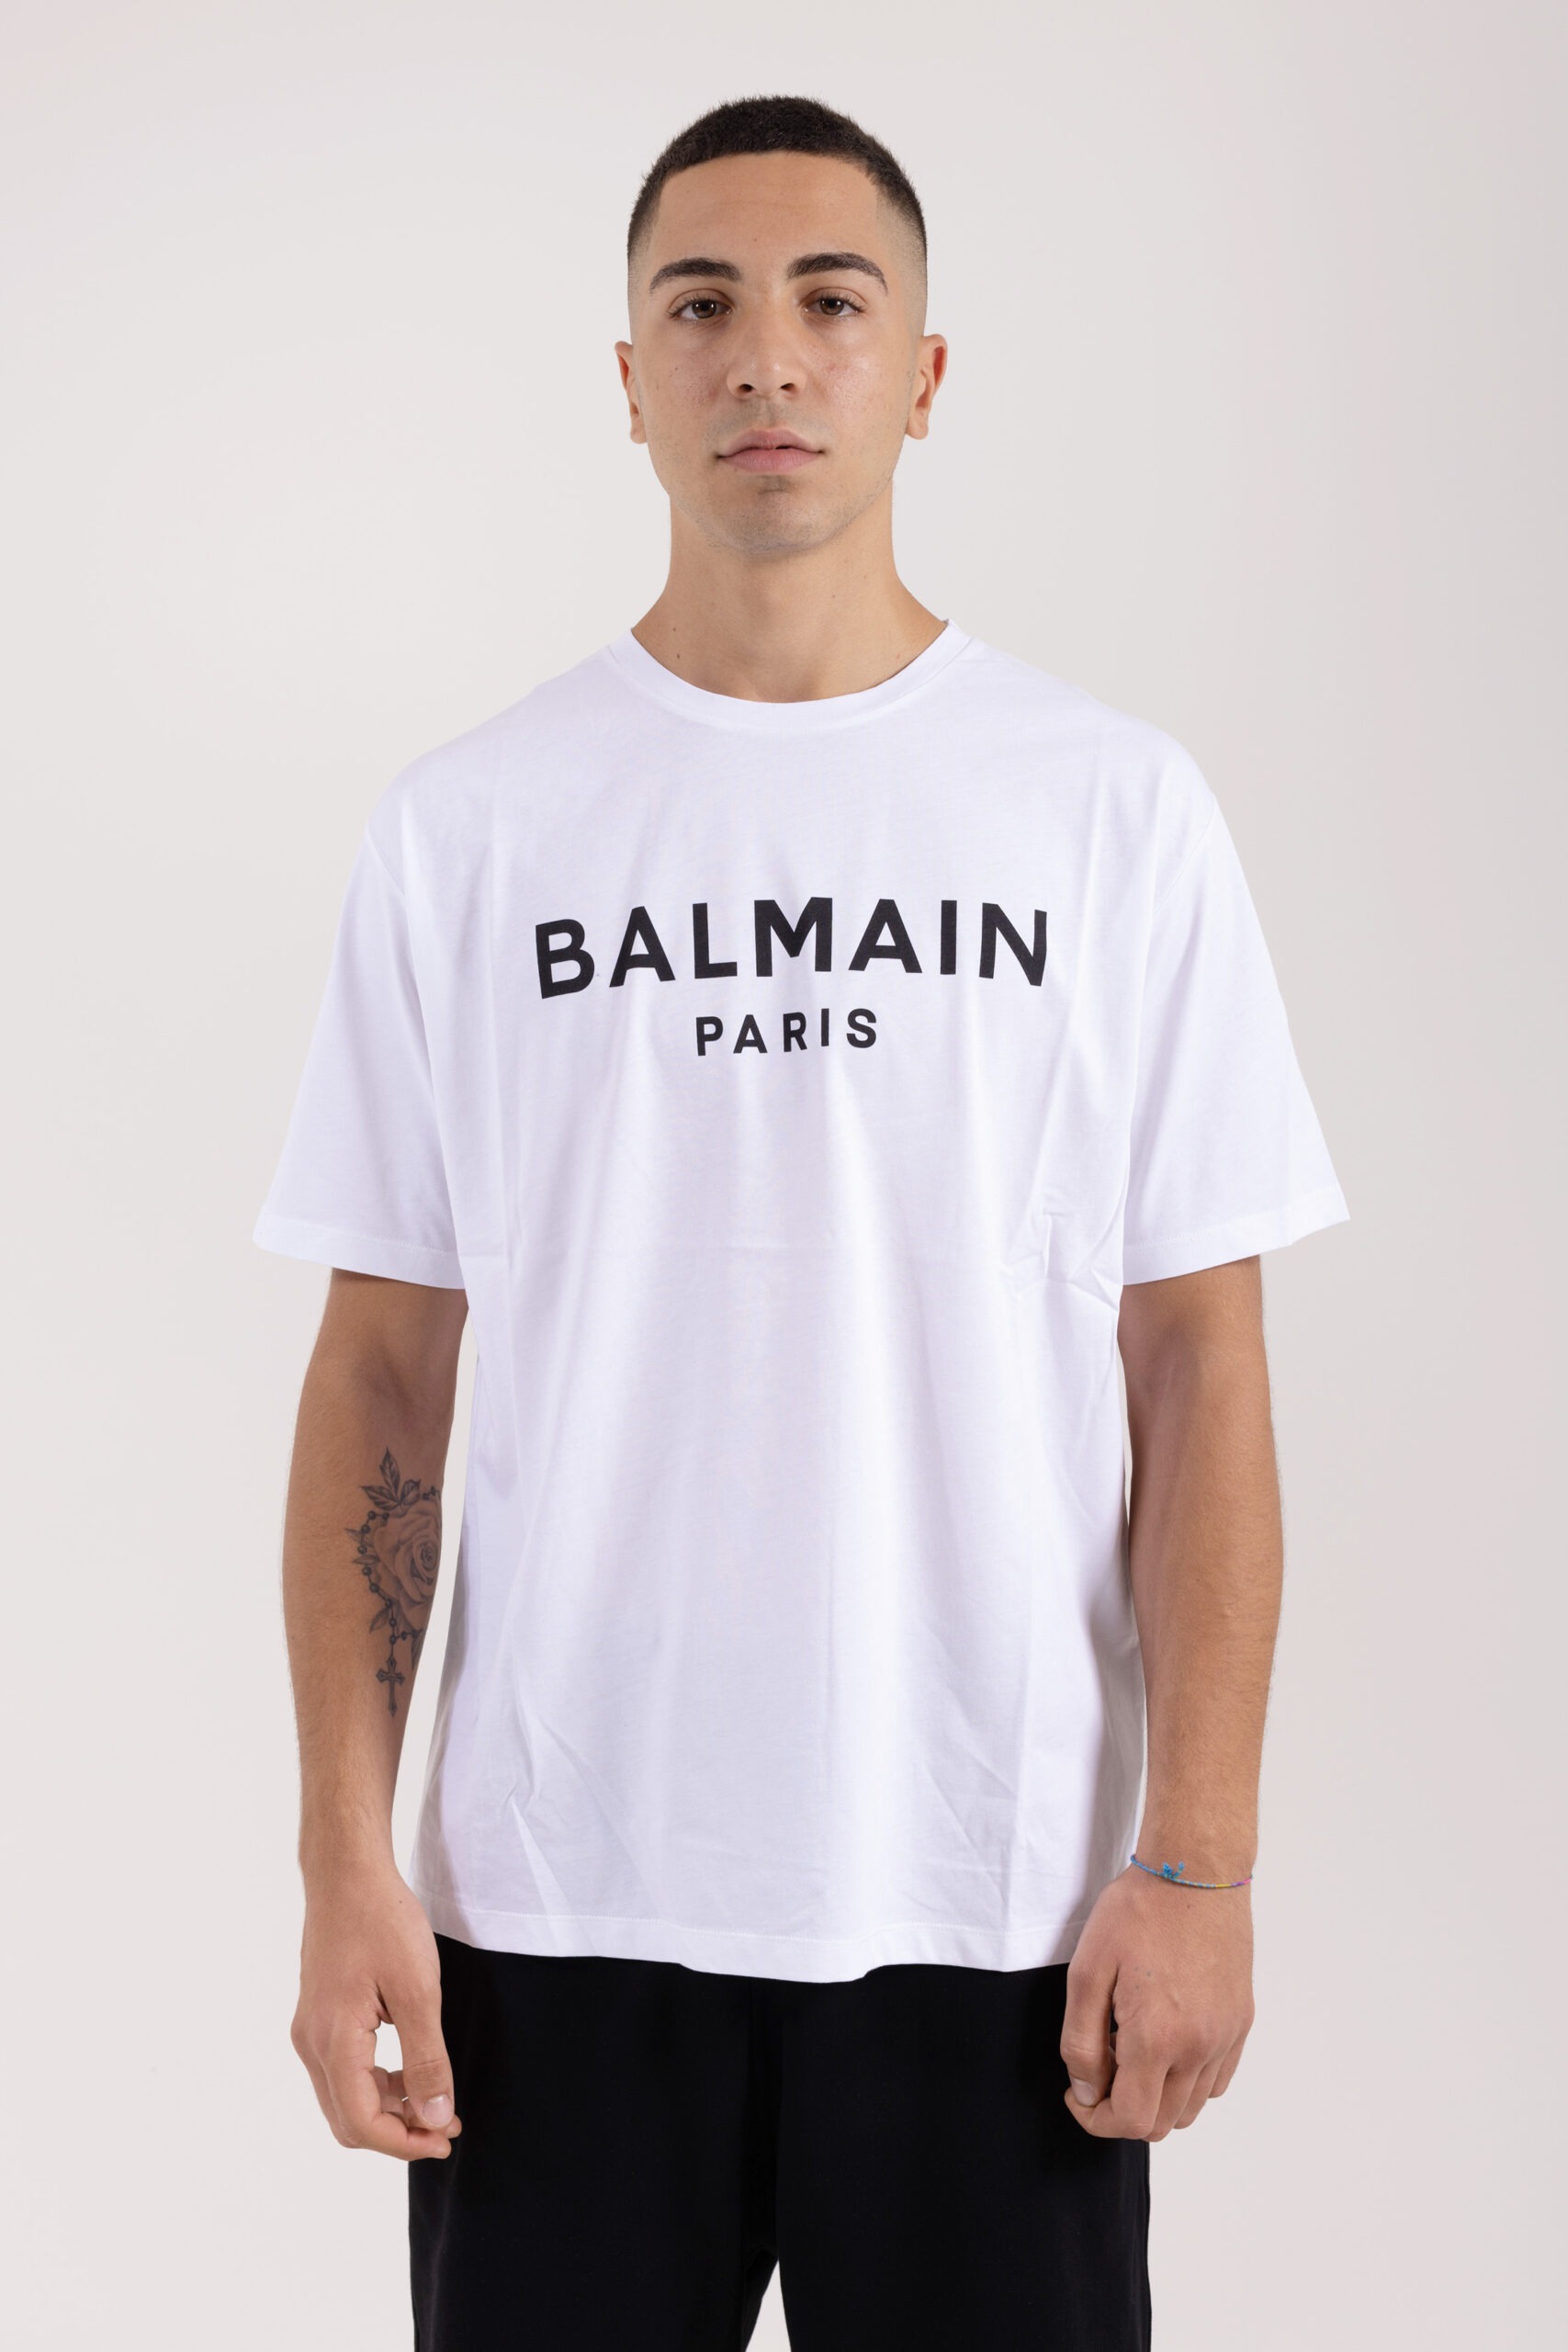 Balmain Paris t shirt con logo